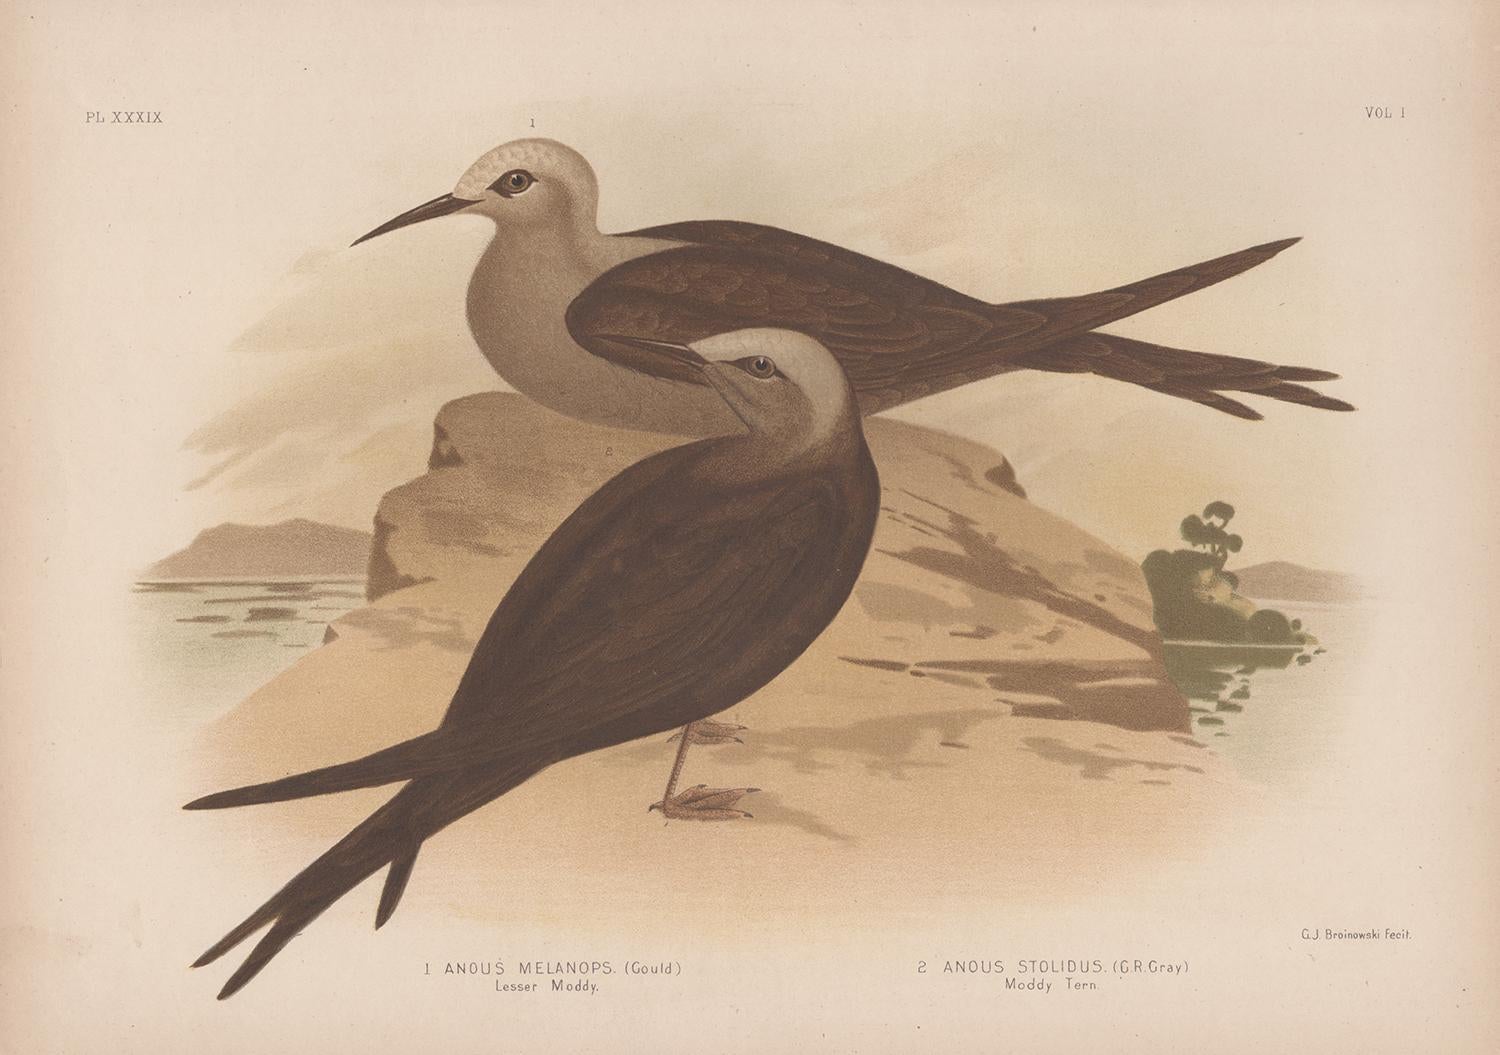 Lesser Moddy and Moddy Tern, antique sea bird chromolithograph print, 1889